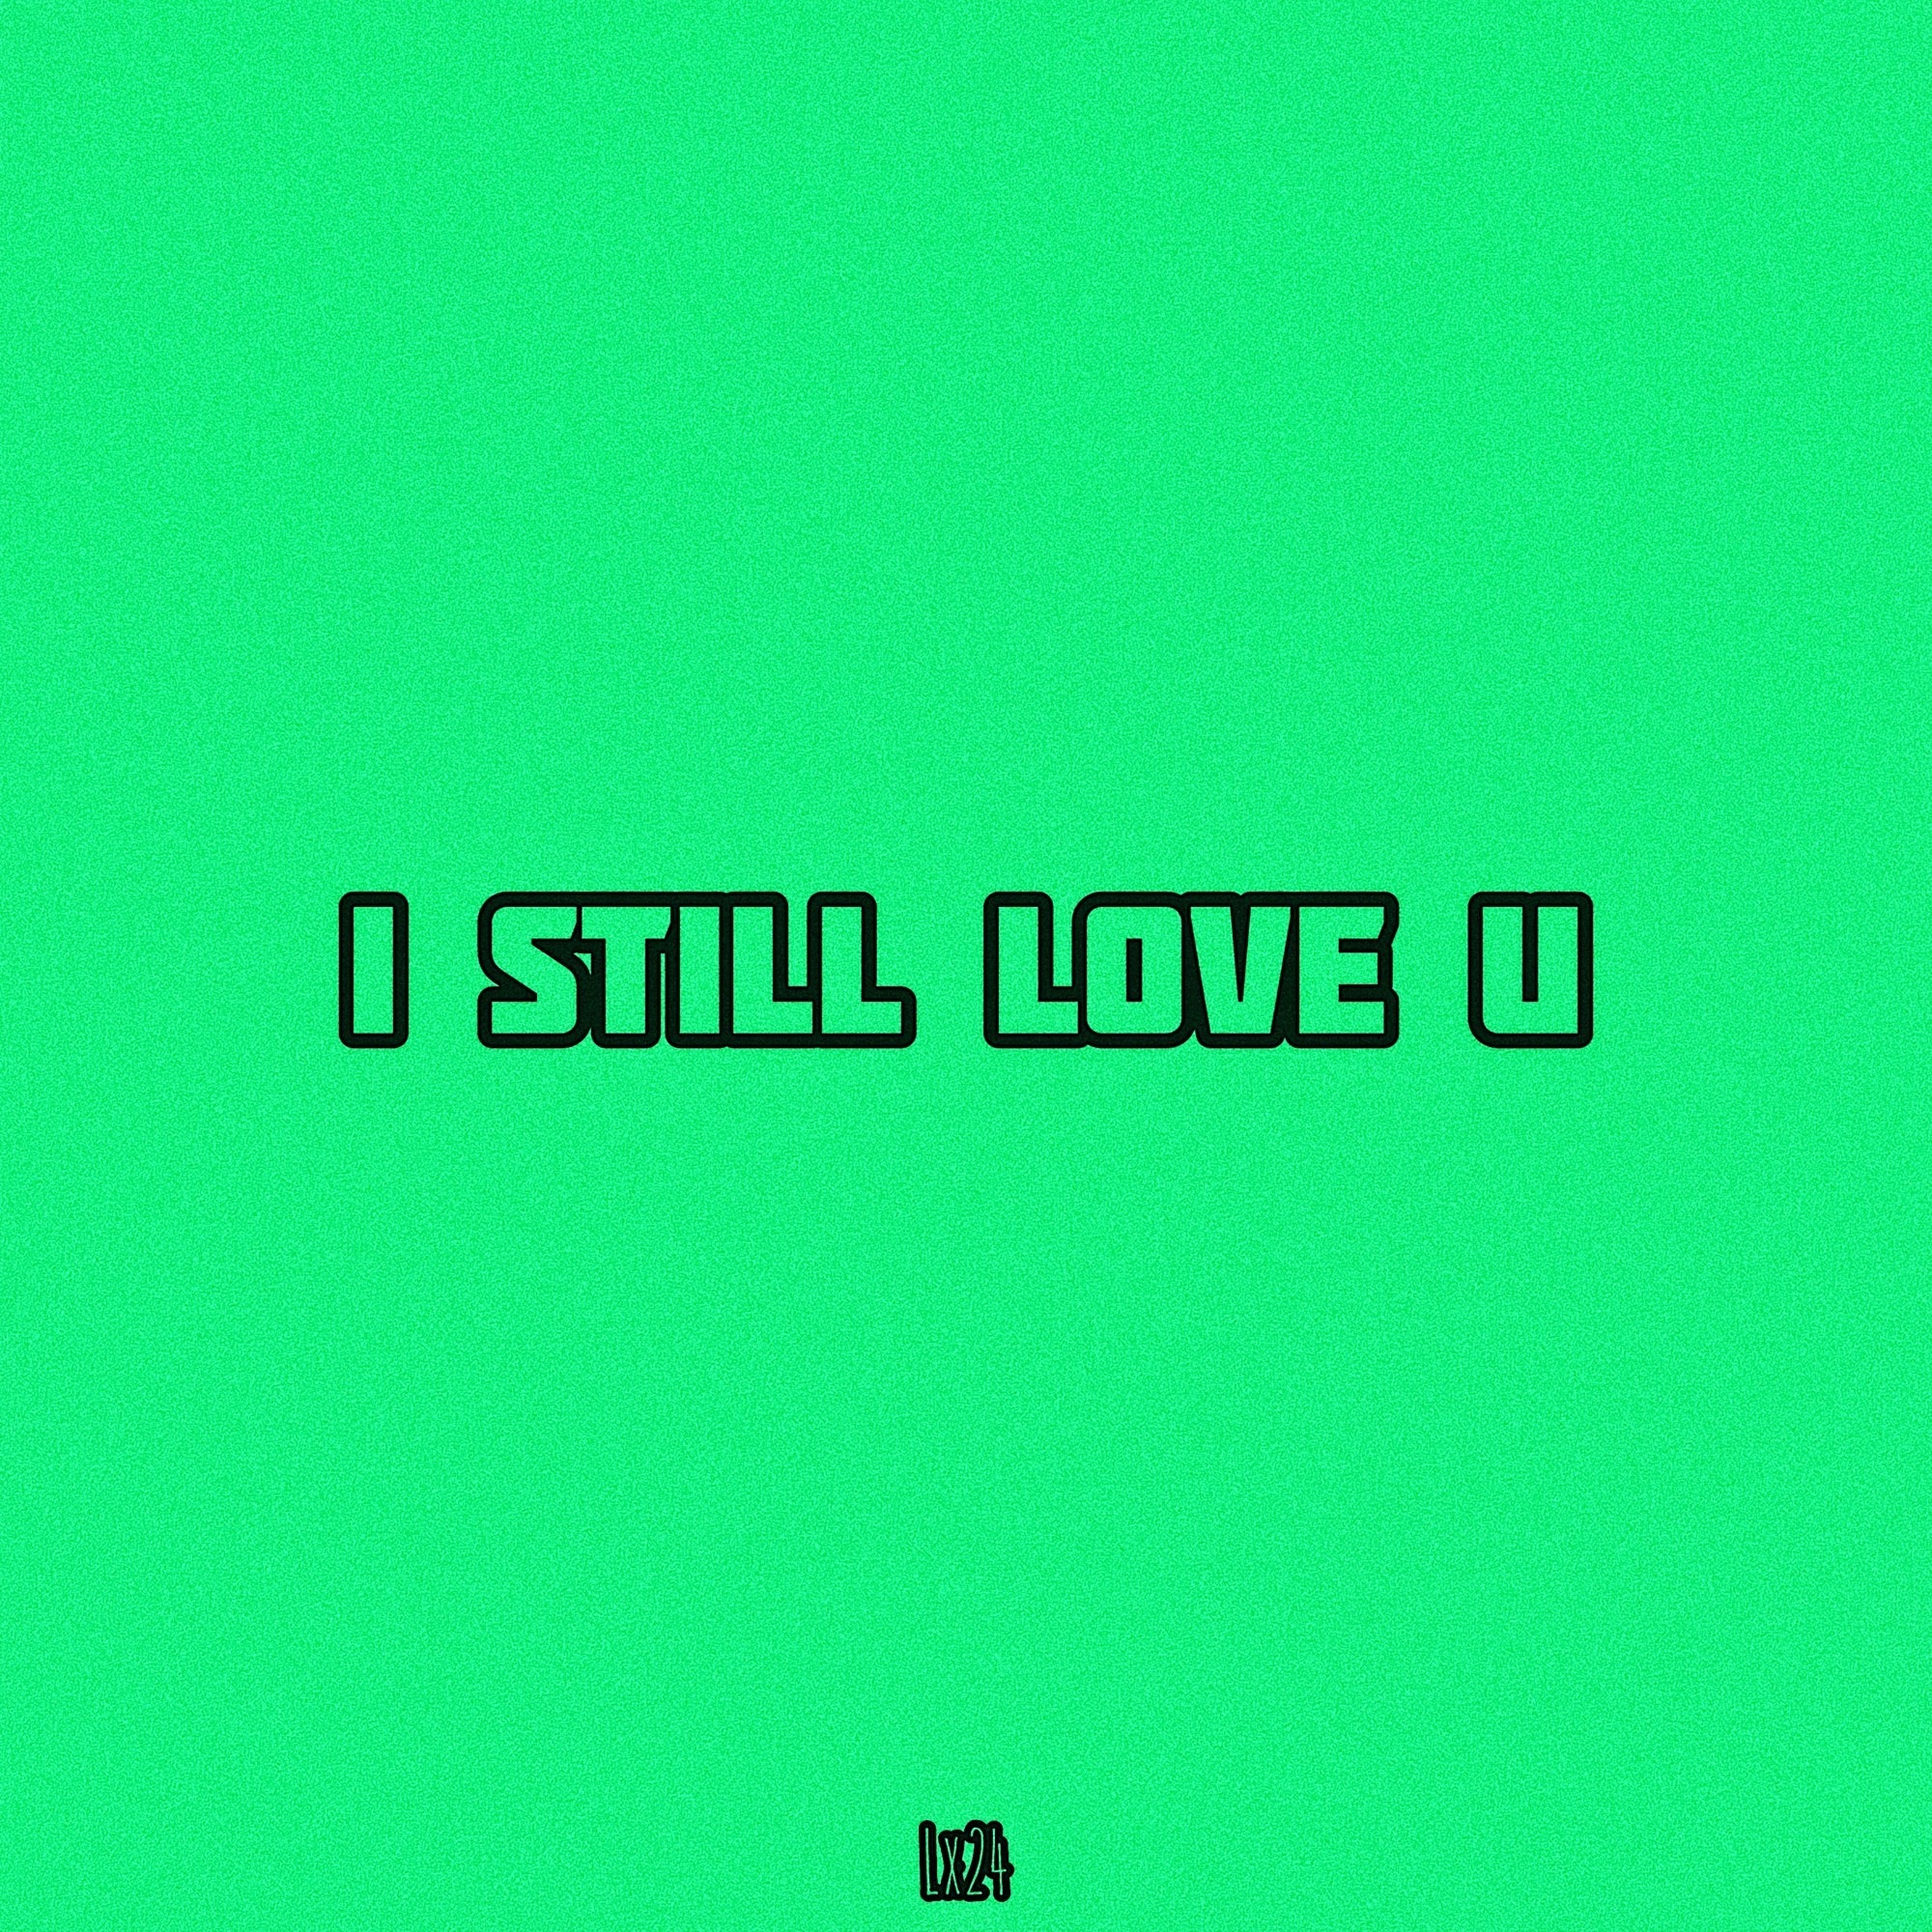 Песня я все еще люблю тебя ну. Я всё ещё люблю. Еще люблю. Я еще люблю тебя. Всё ещё люблю тебя.